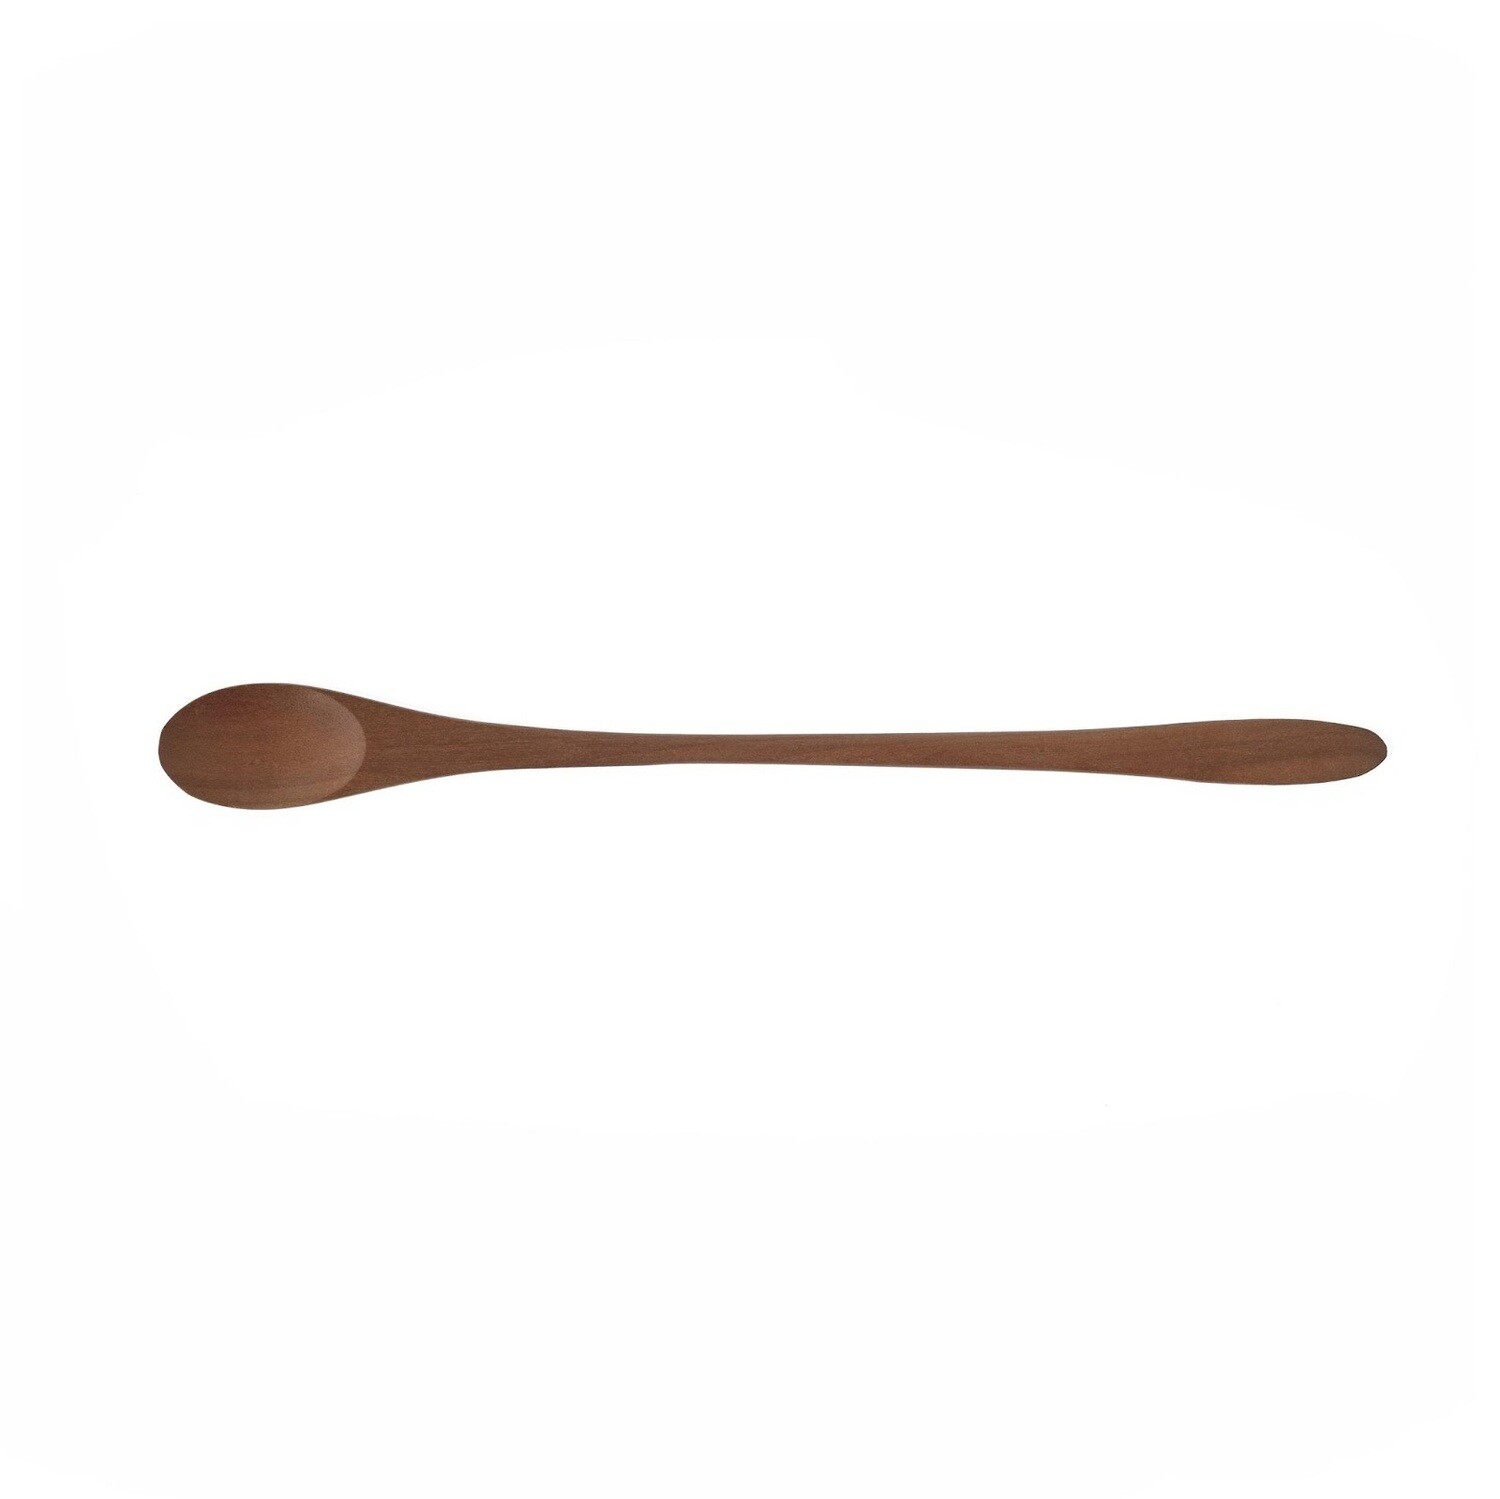 Spoon 12 (set of 5)